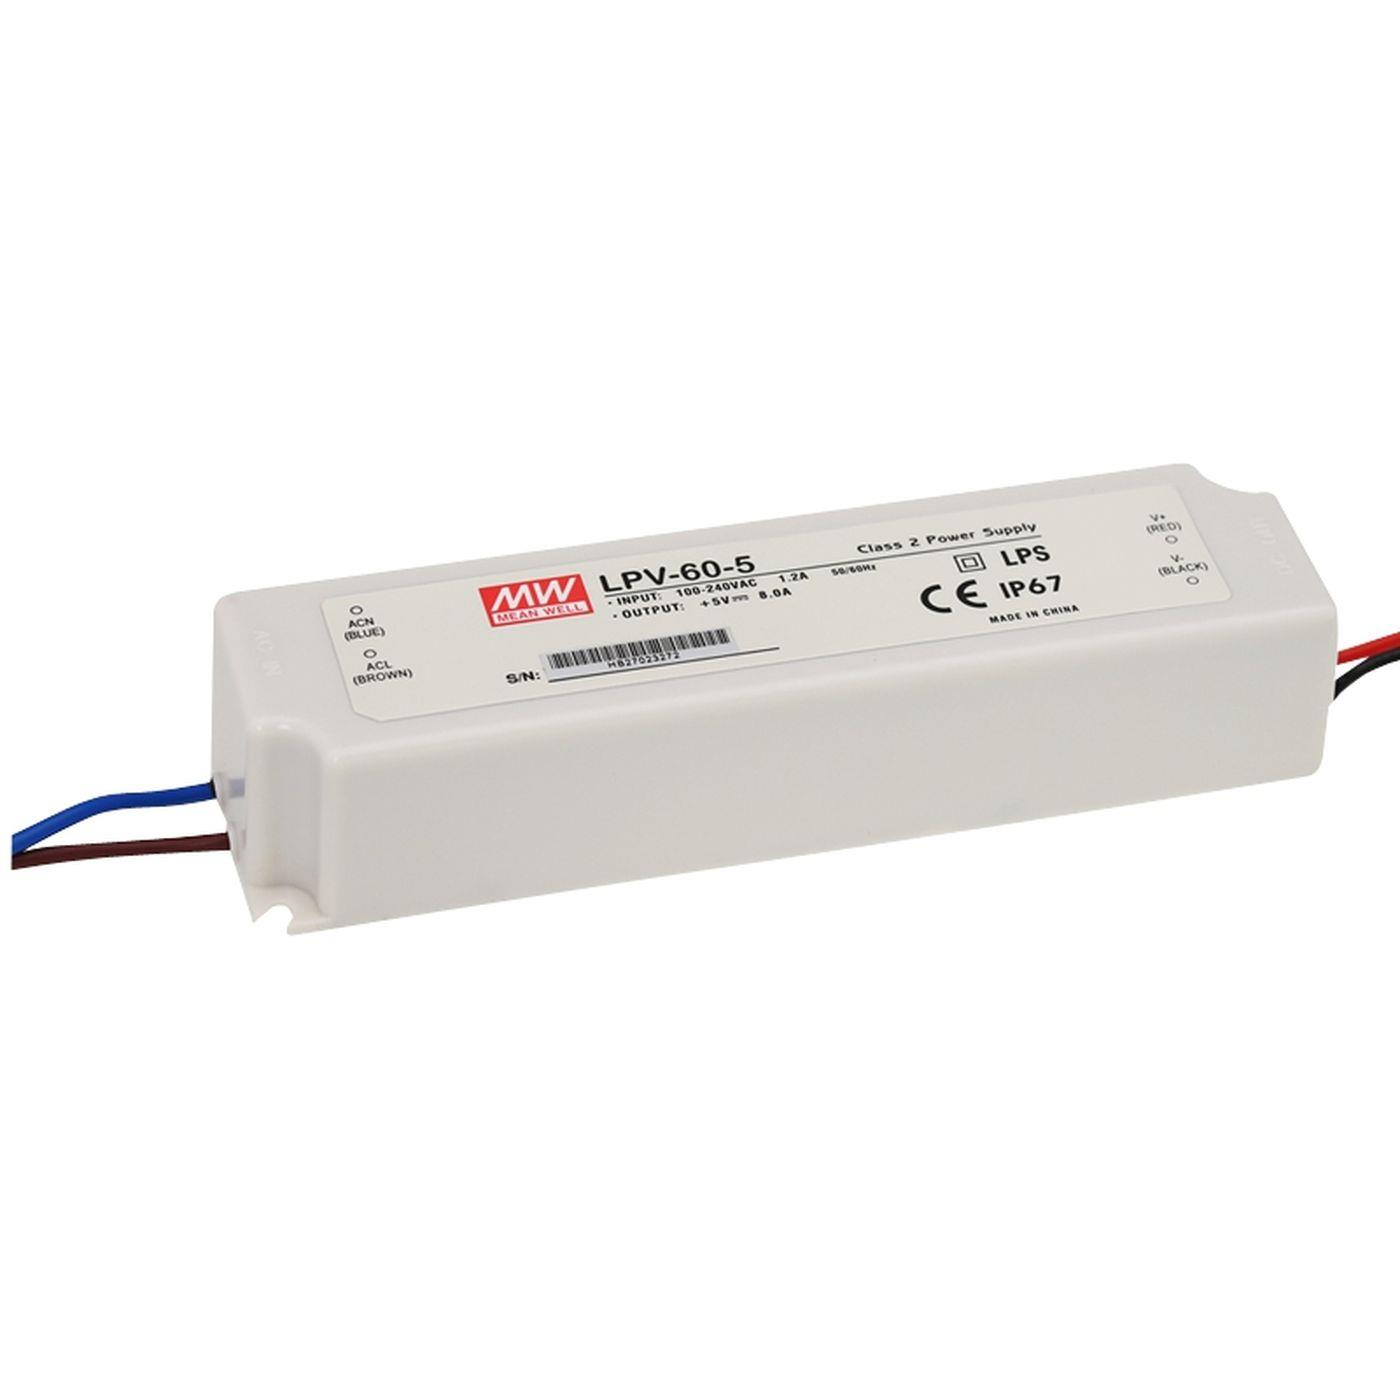 LPV-60-15 60W 15V 4A LED power supply Transformer Driver IP67